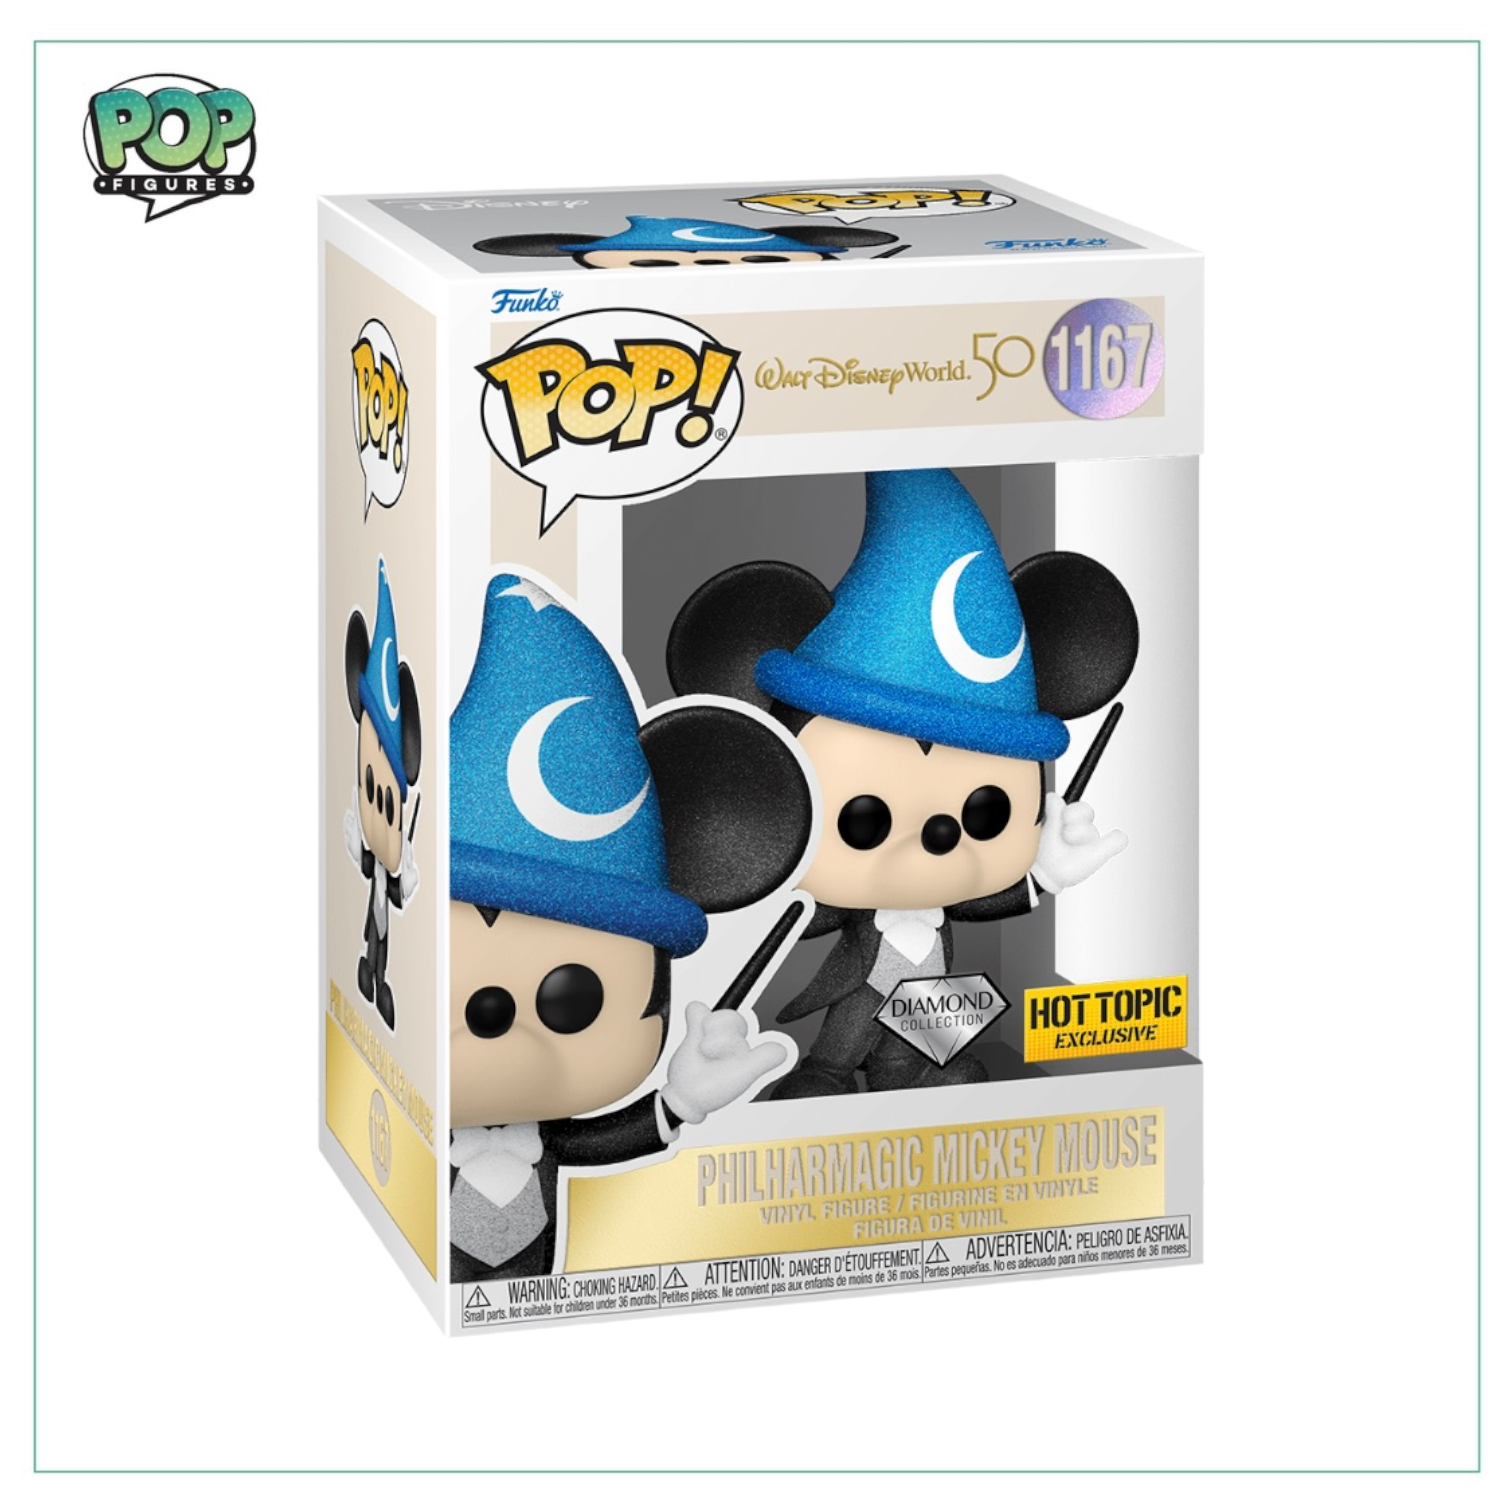 Philharmagic Mickey Mouse #1167 (Diamond Collection) Funko Pop! Disney 50th - Hot Topic